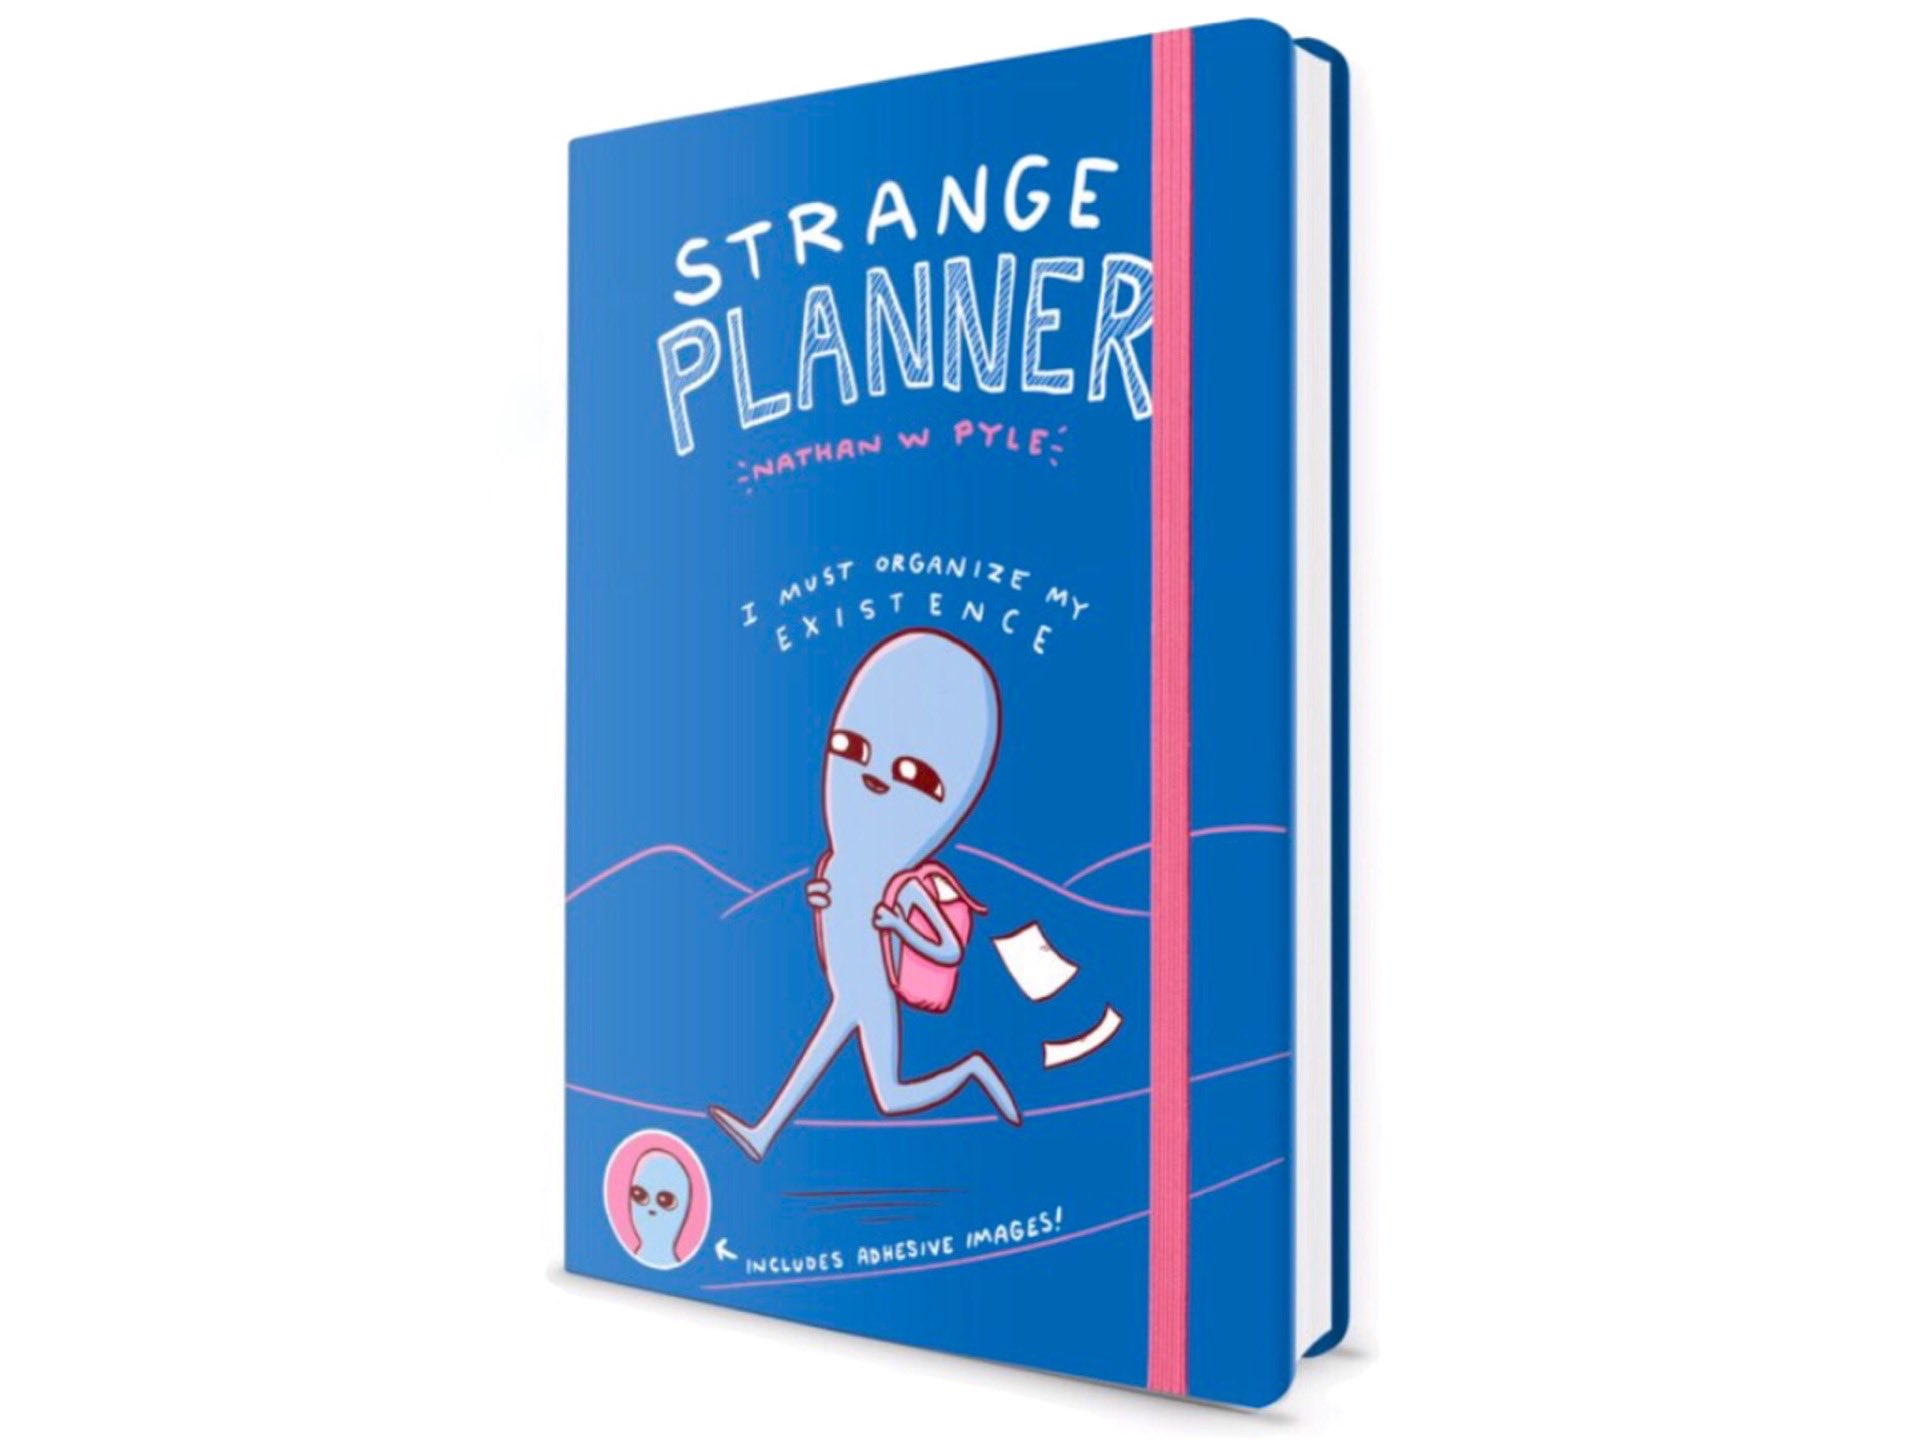 nathan-w-pyle-strange-planet-planner